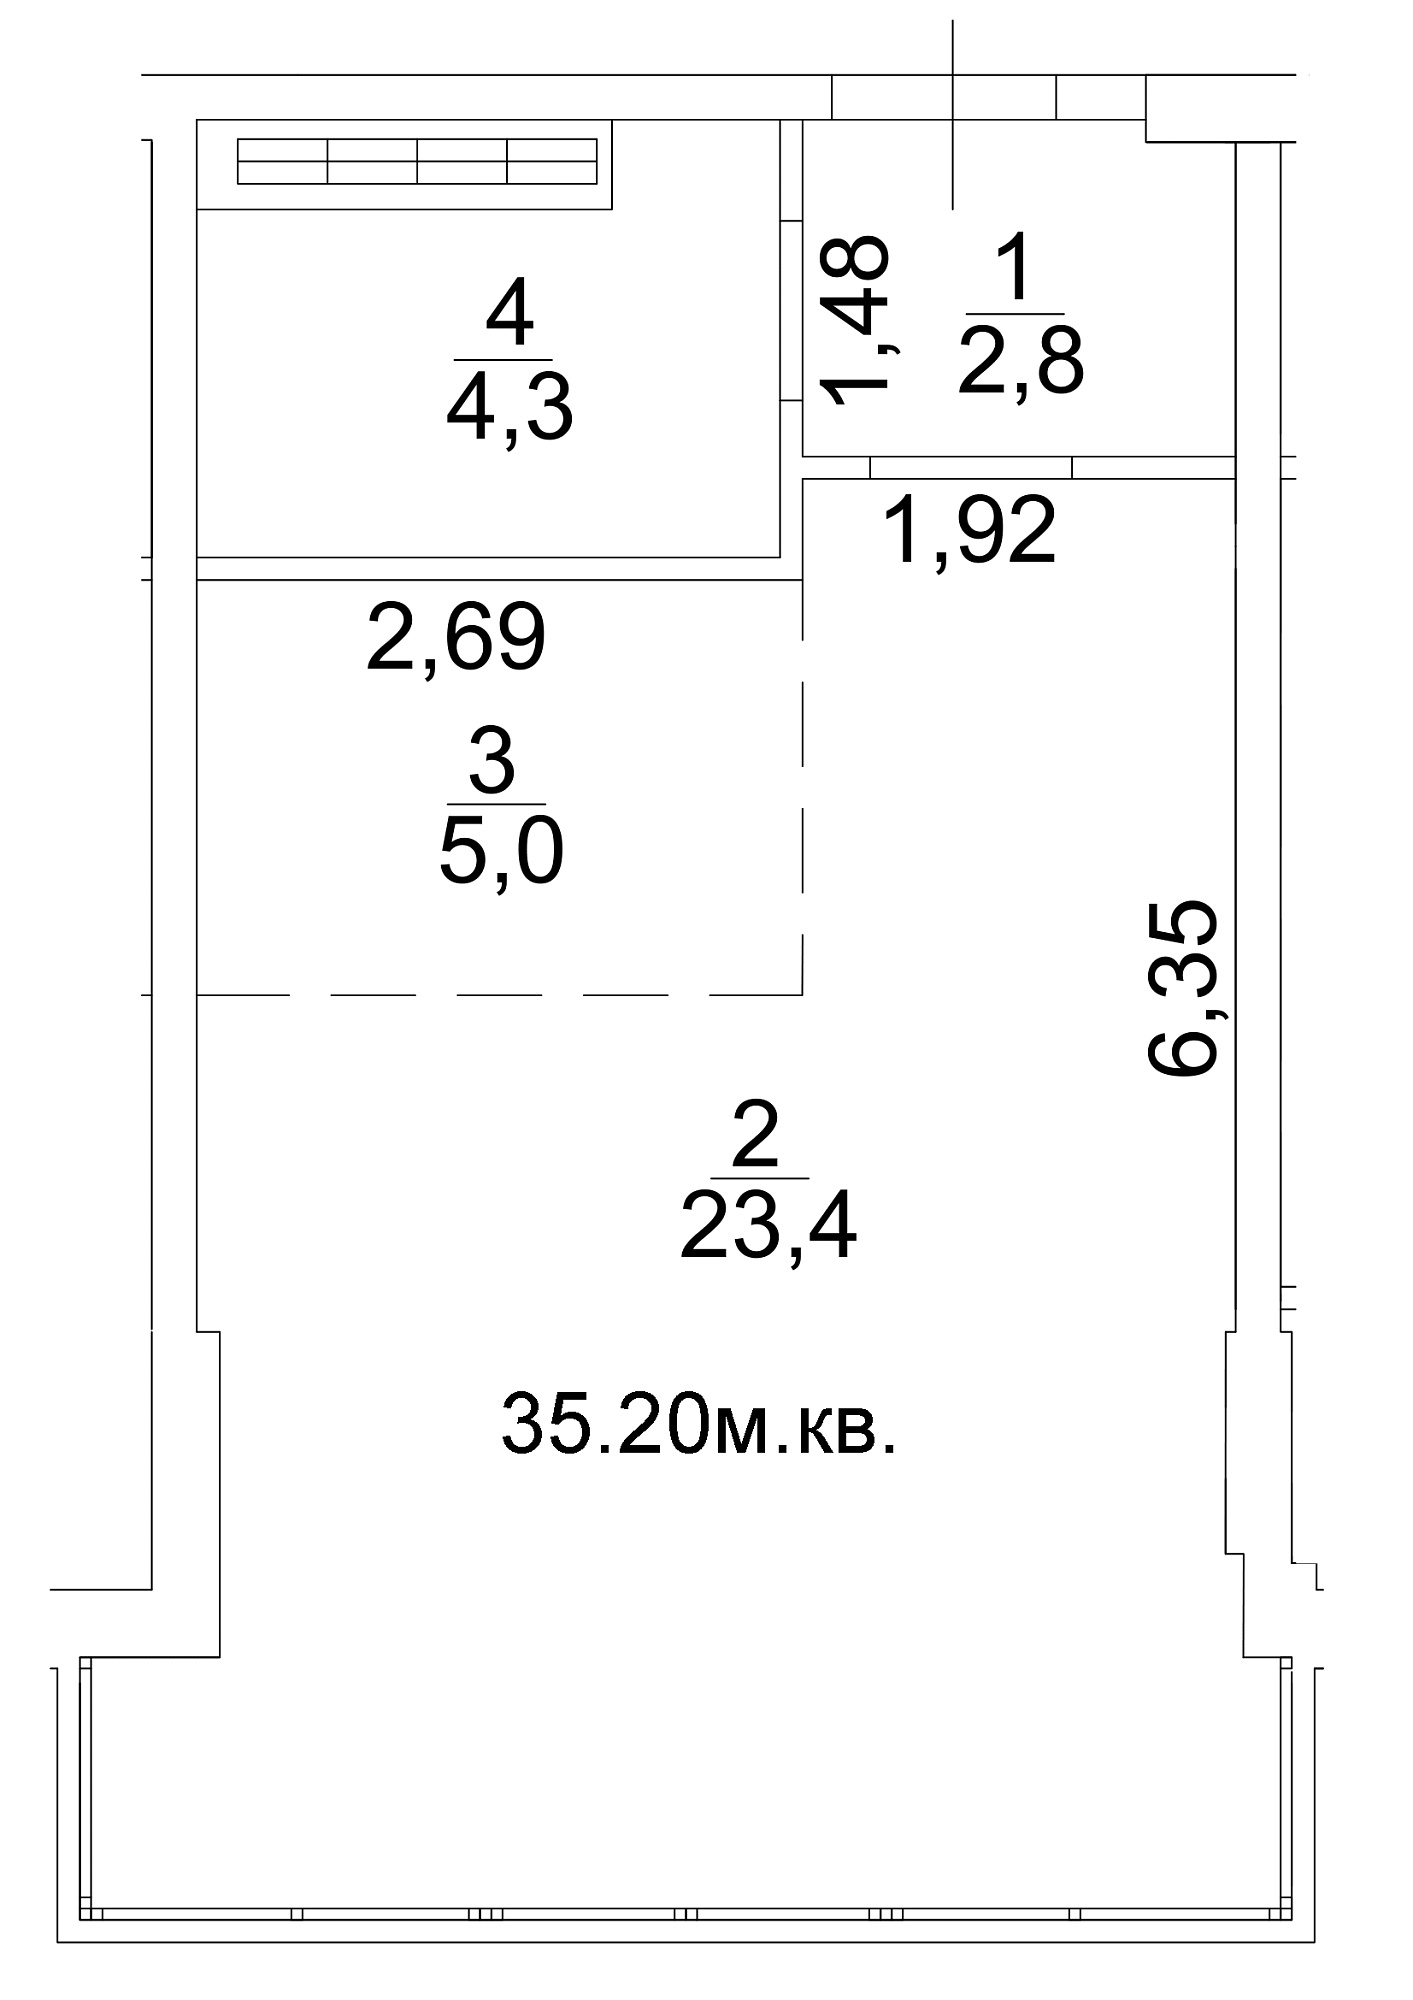 Планировка Smart-квартира площей 35.2м2, AB-13-09/0070б.